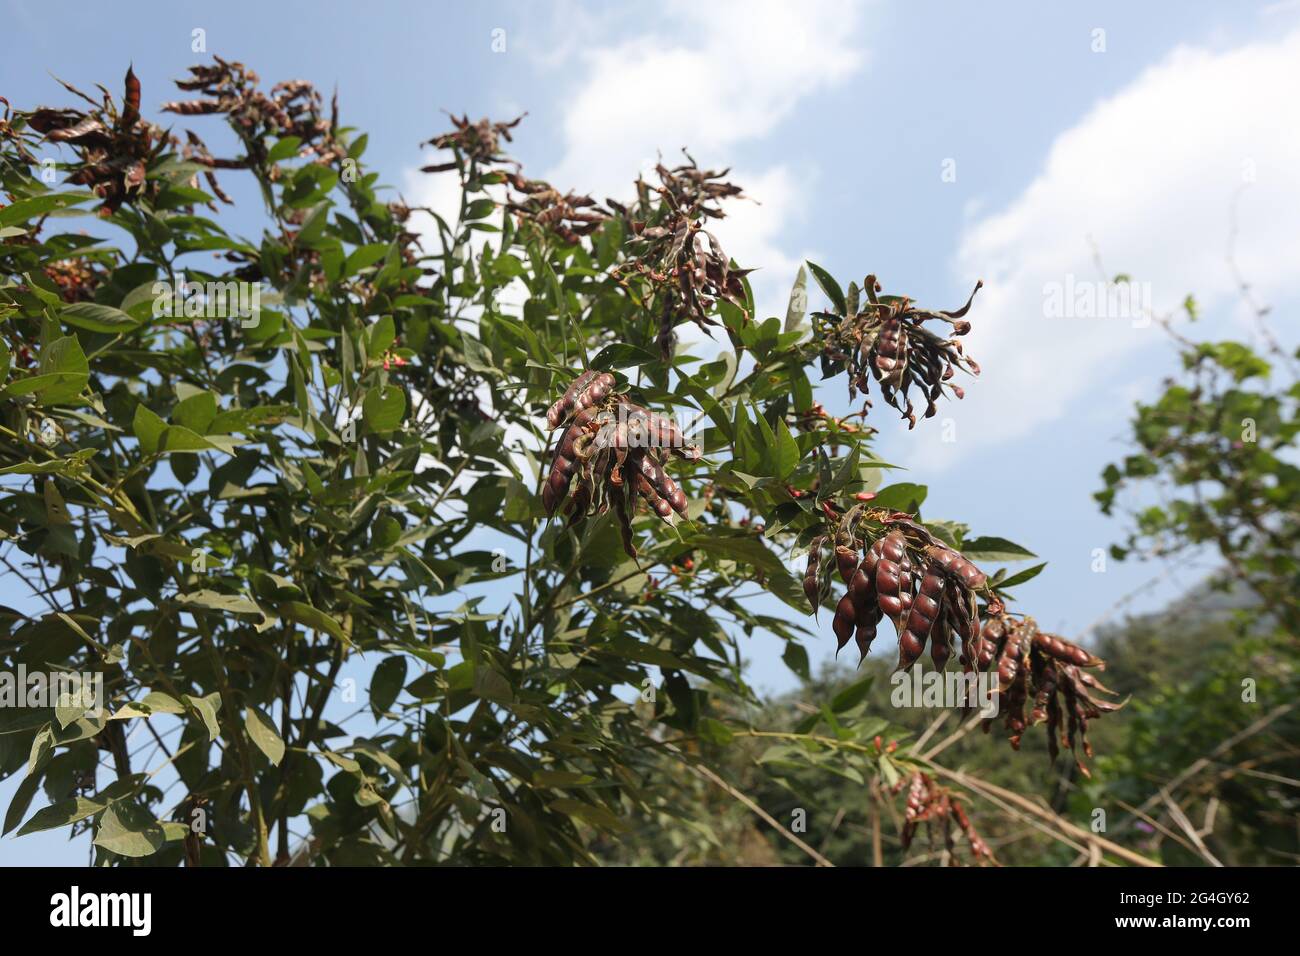 LANJIA SAORA TRIBE. Pigeon pea or toor dal plant with seed pods. Cajanus cajan. Puttasingh village in Odisha, India Stock Photo